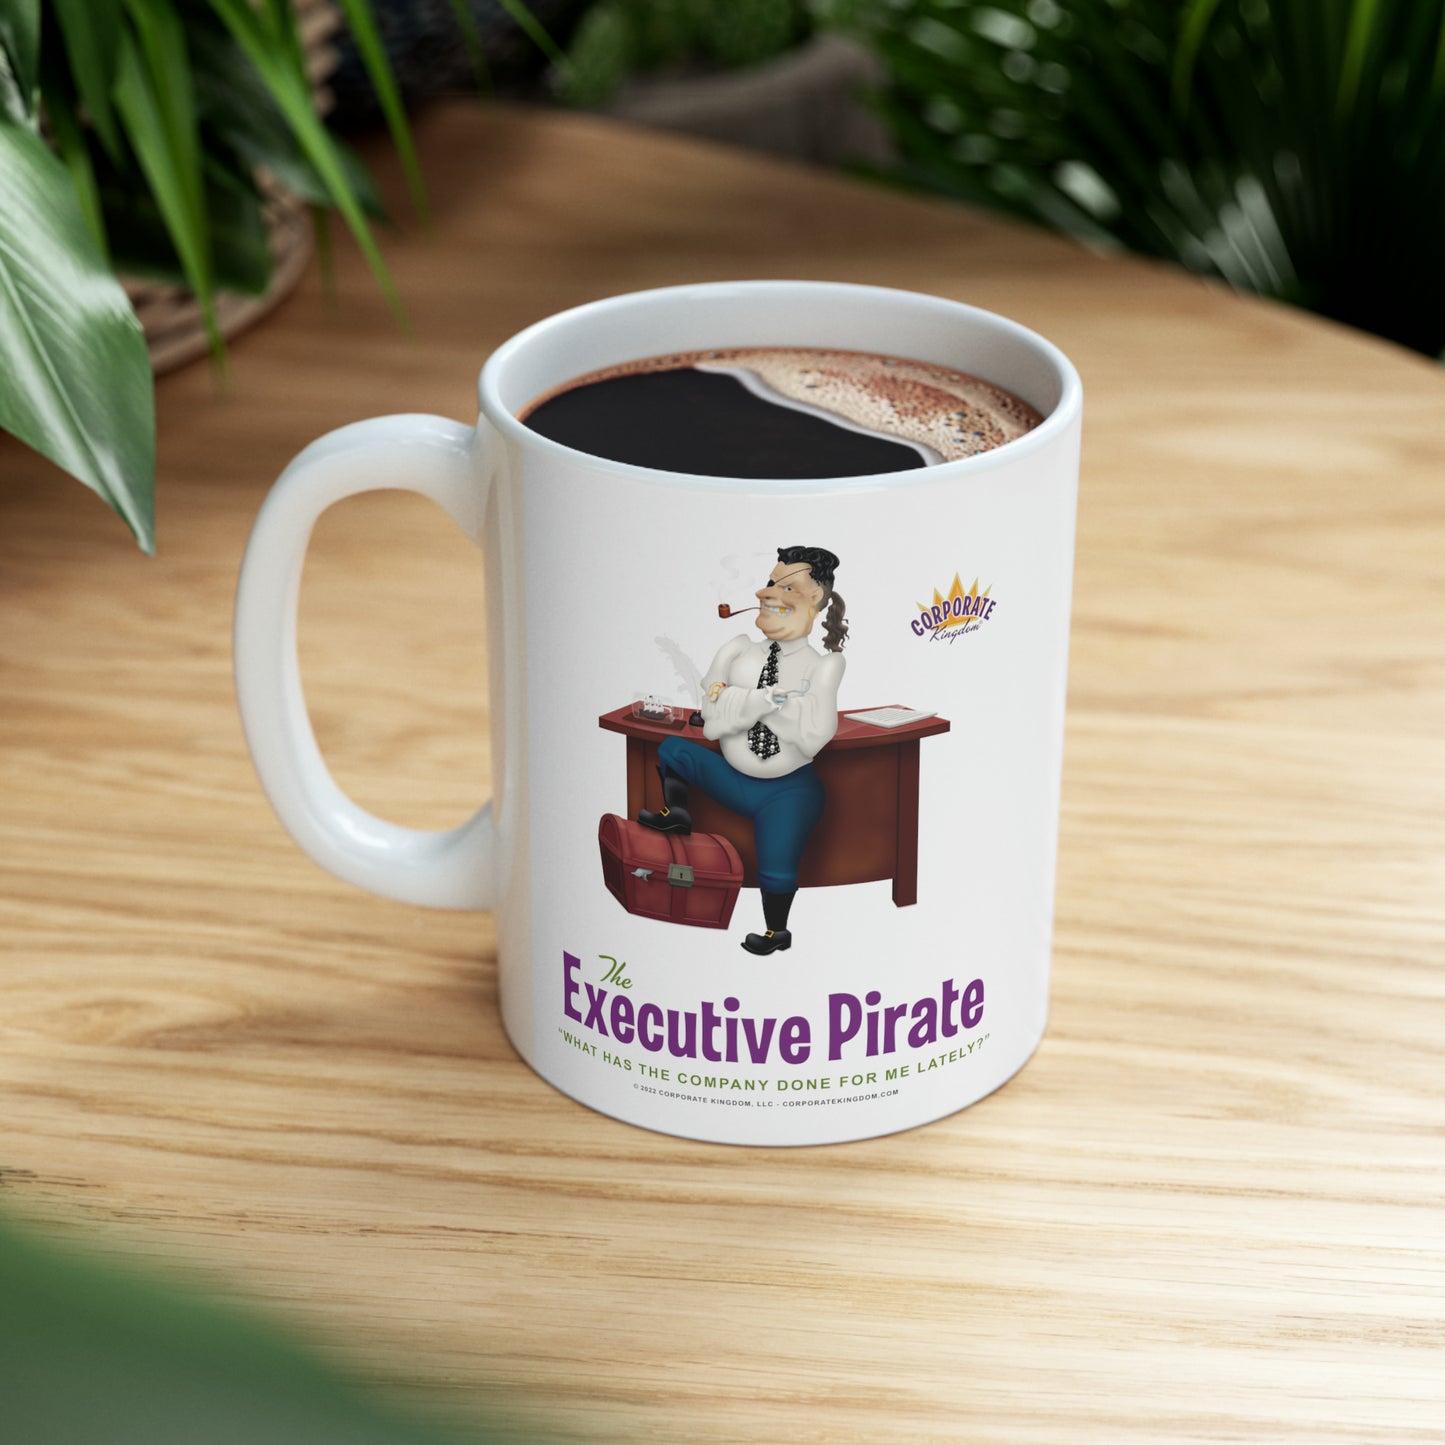 Executive Pirate Coffee Mug by Corporate Kingdom®